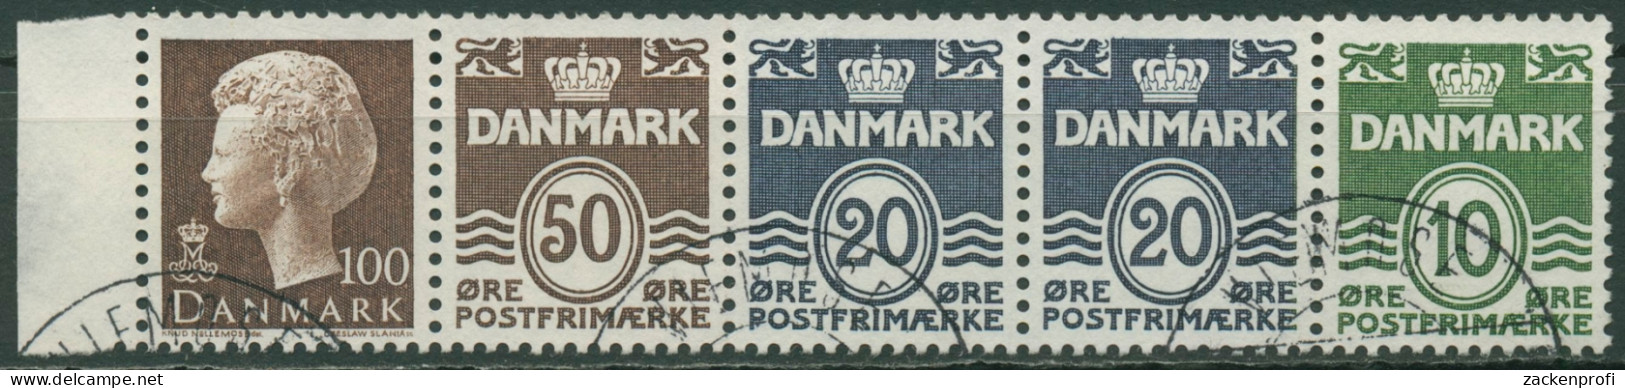 Dänemark 1977 Markenheftchenblatt H-Bl. 15 Gestempelt (C96549) - Carnets